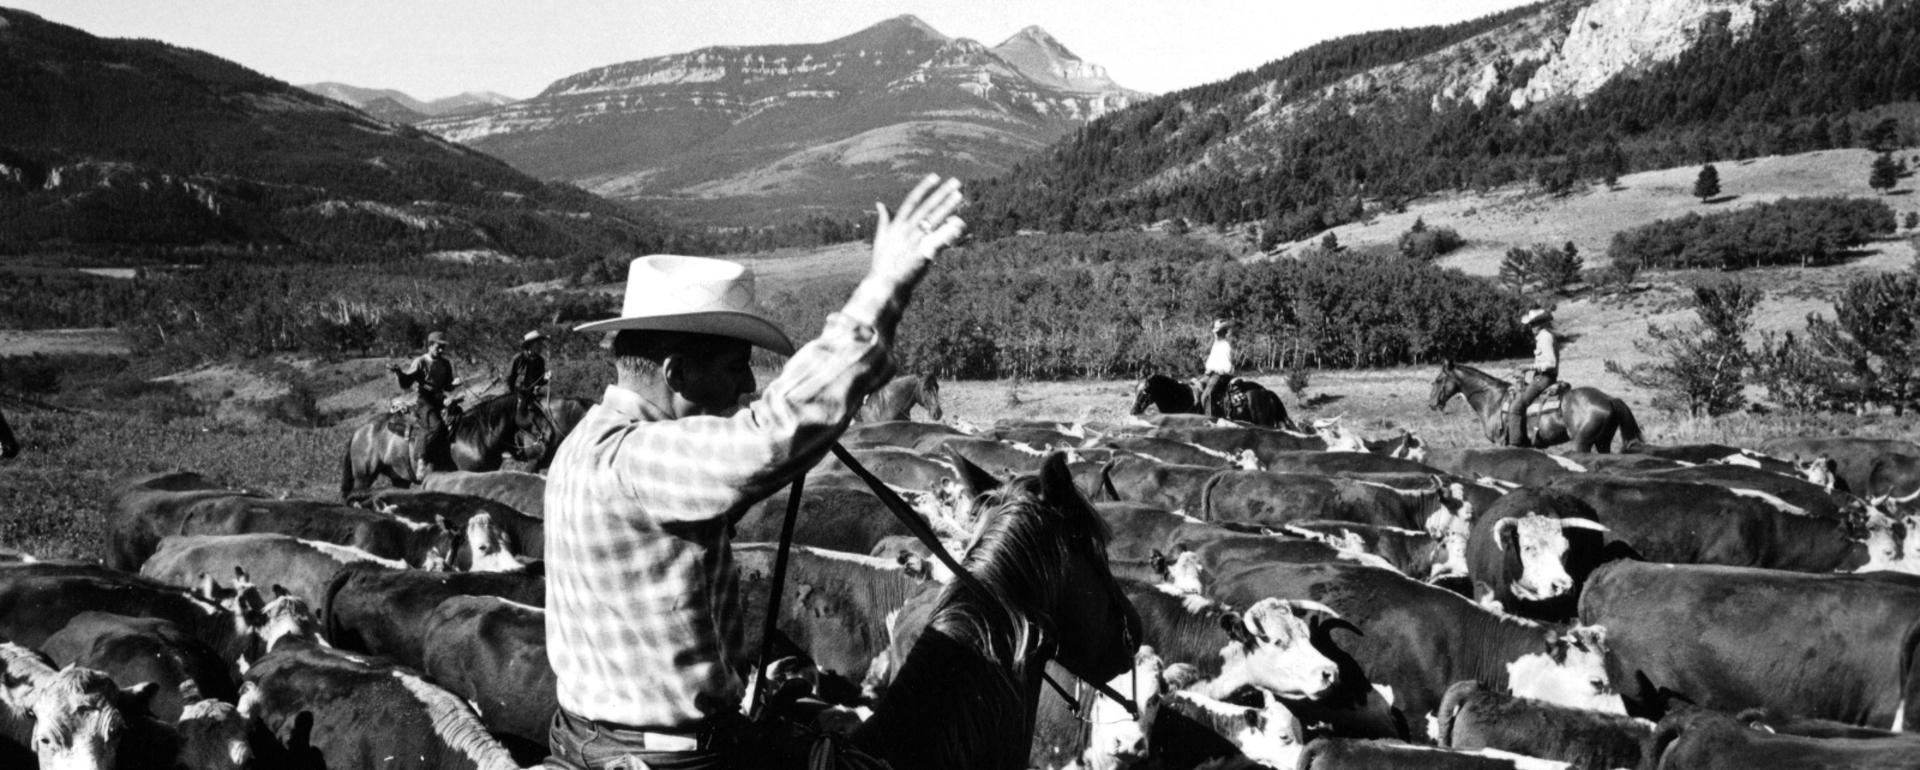 Bob Staffanson in the saddle herding cattle half a century ago.